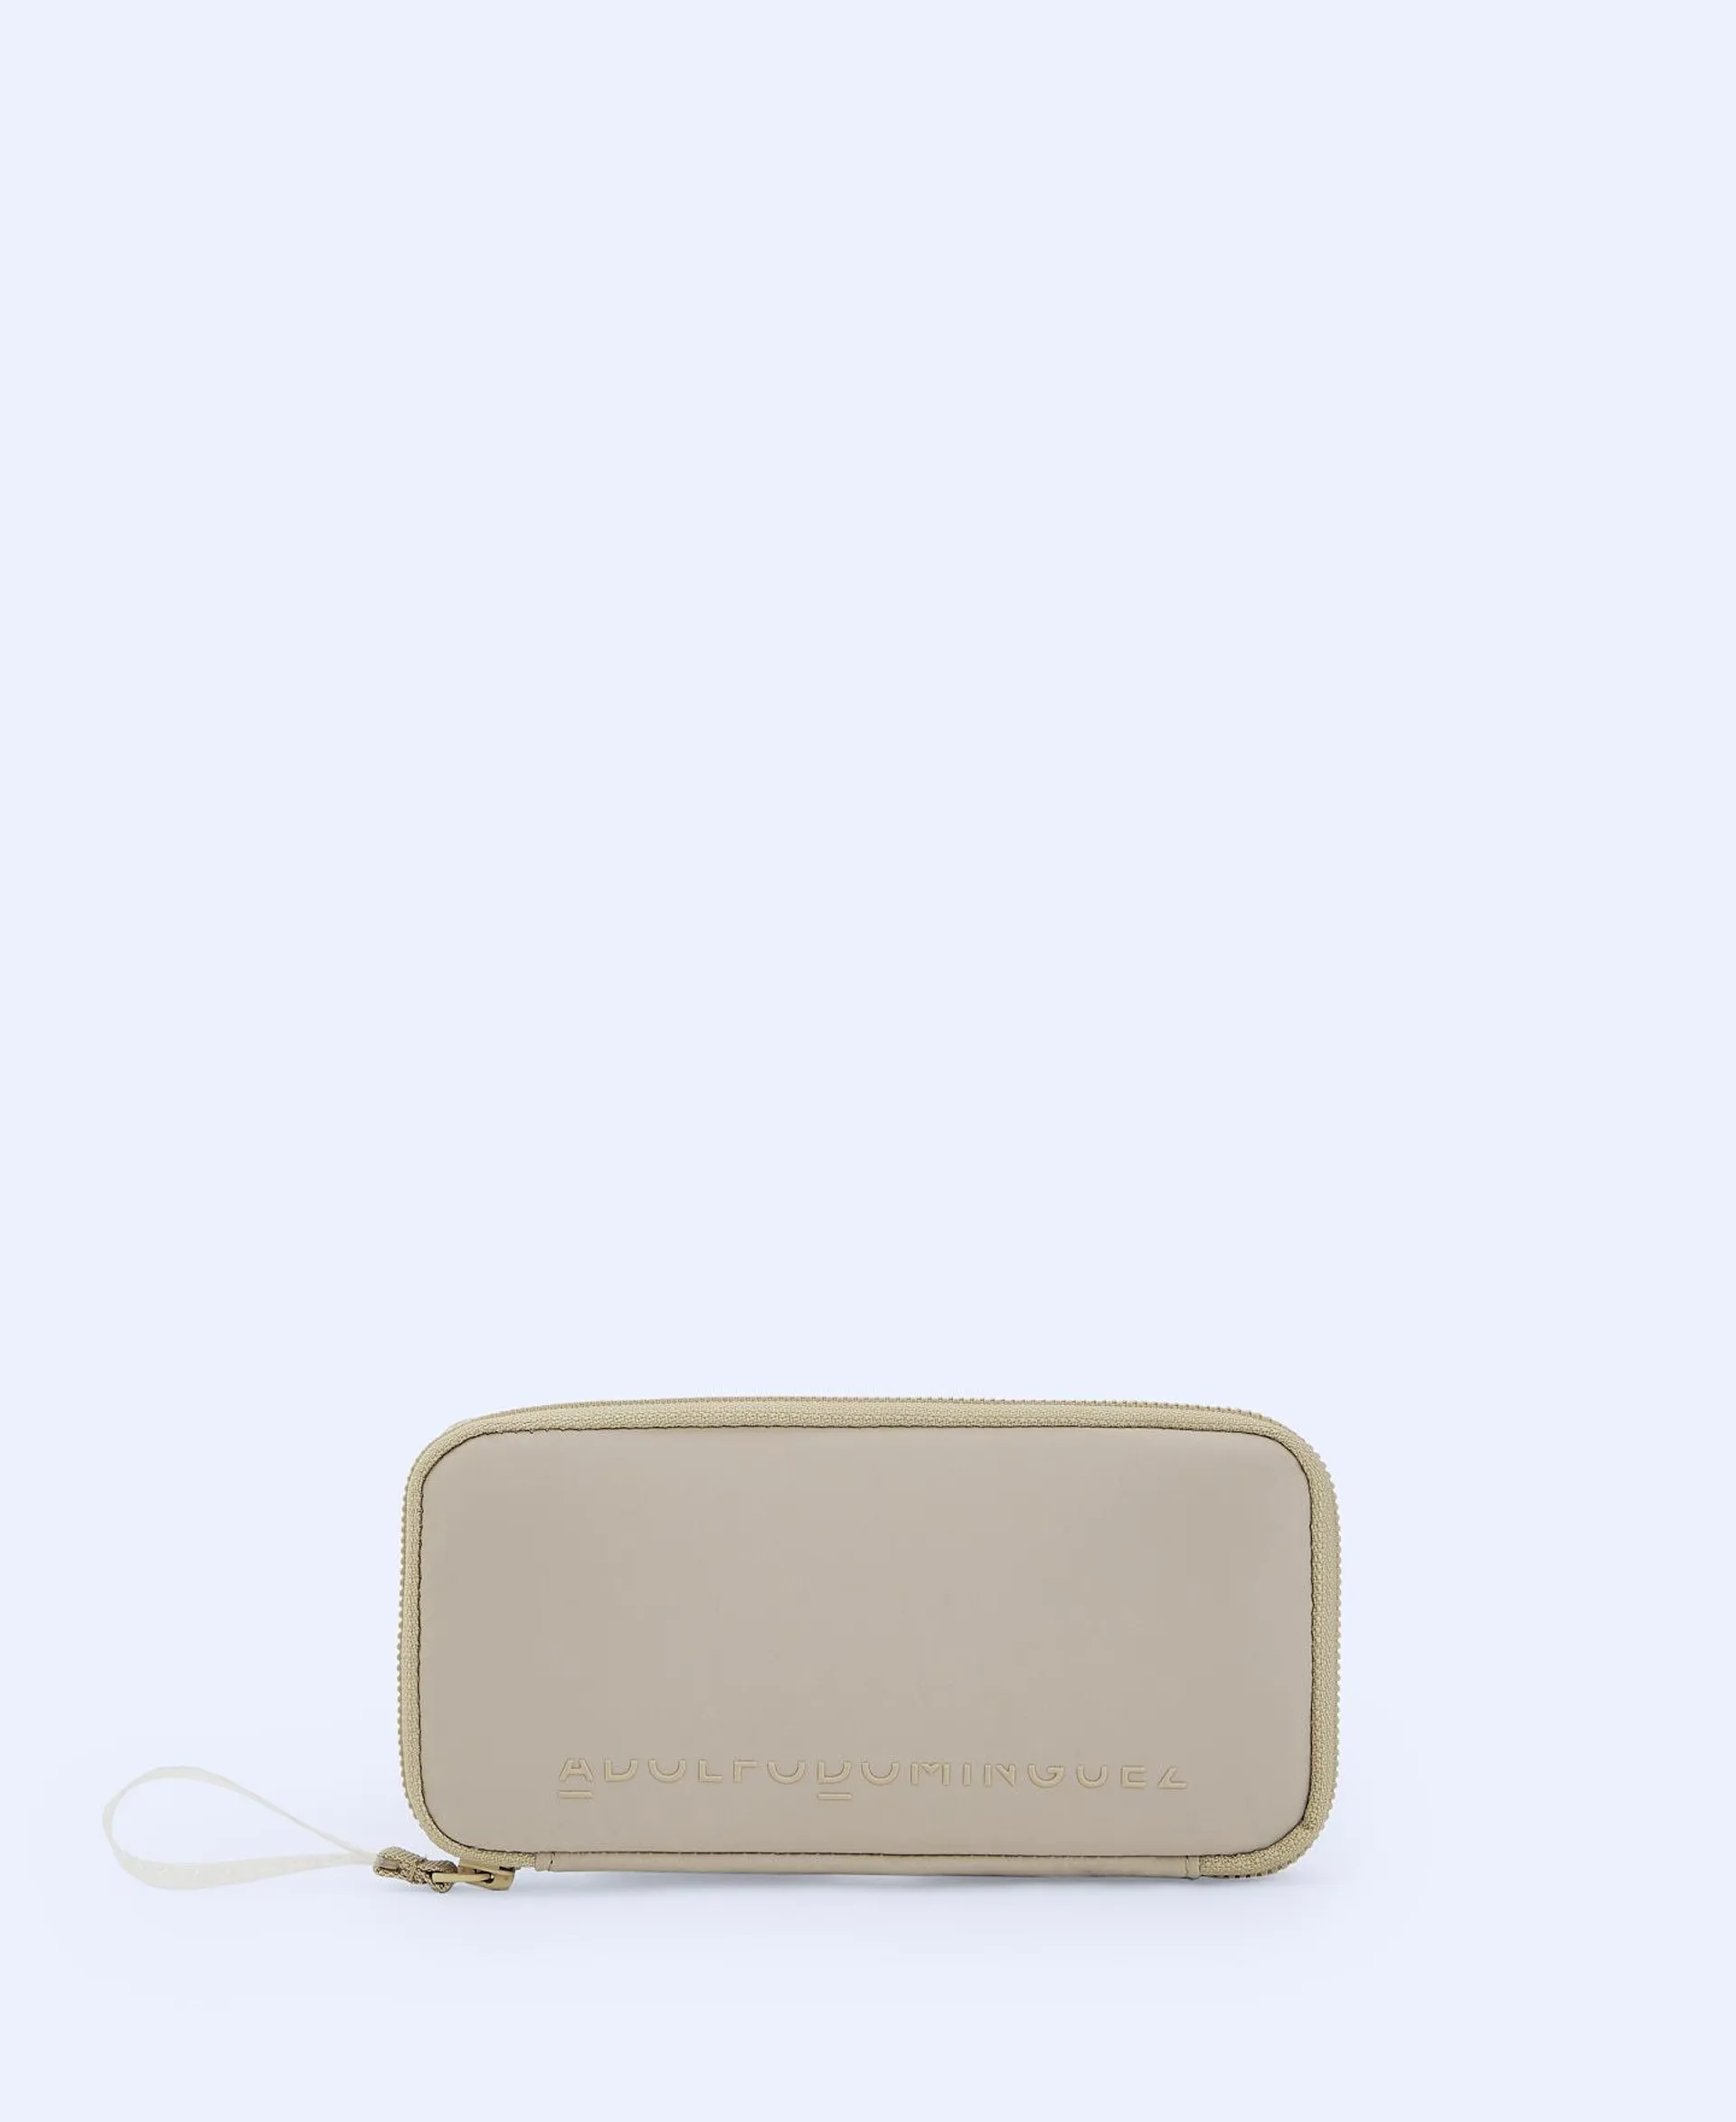 Smooth texture rectangular wallet